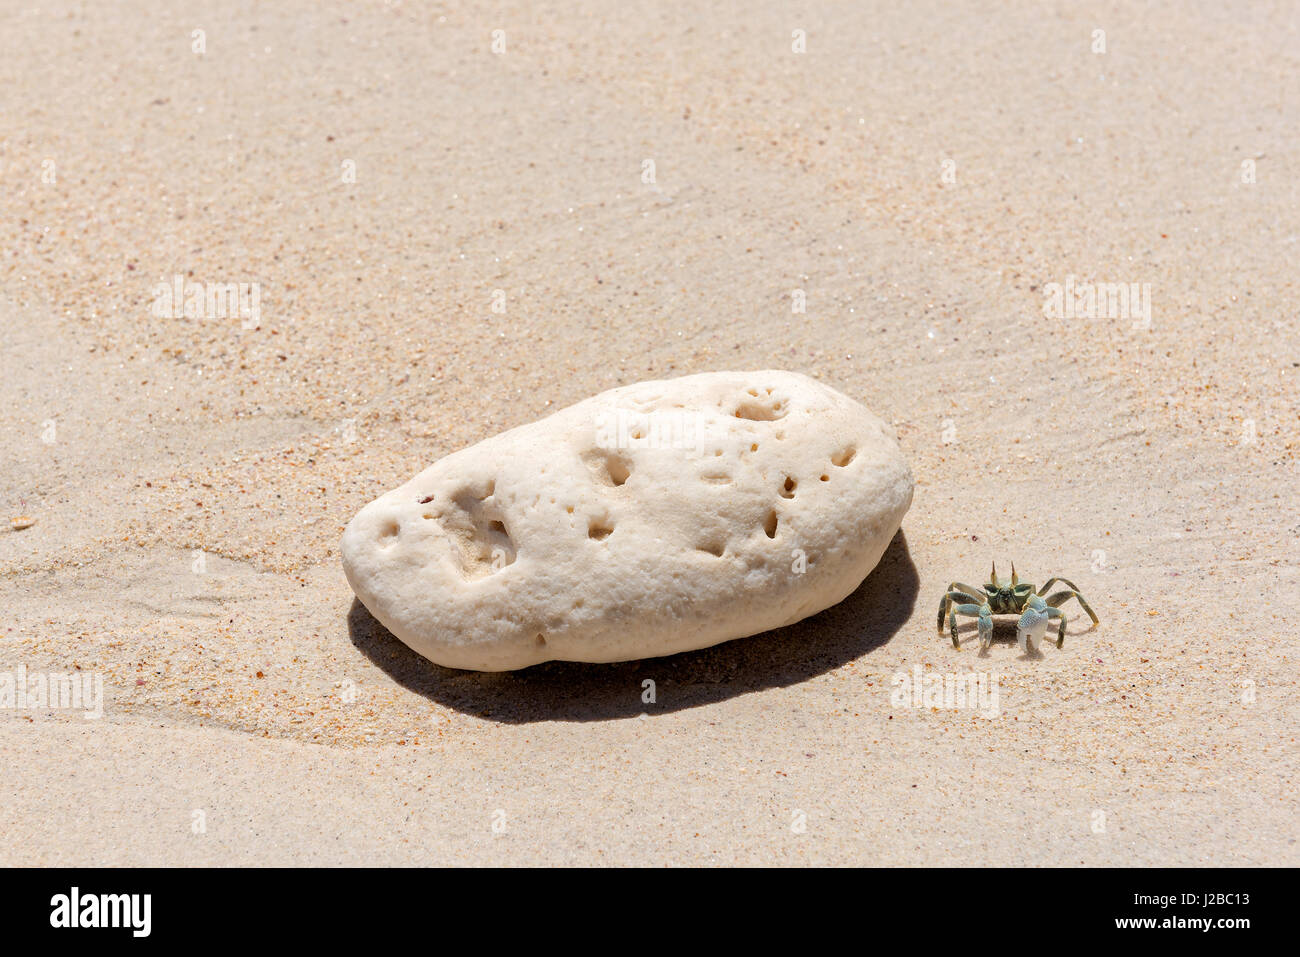 Beach with crab an white stone. Stock Photo